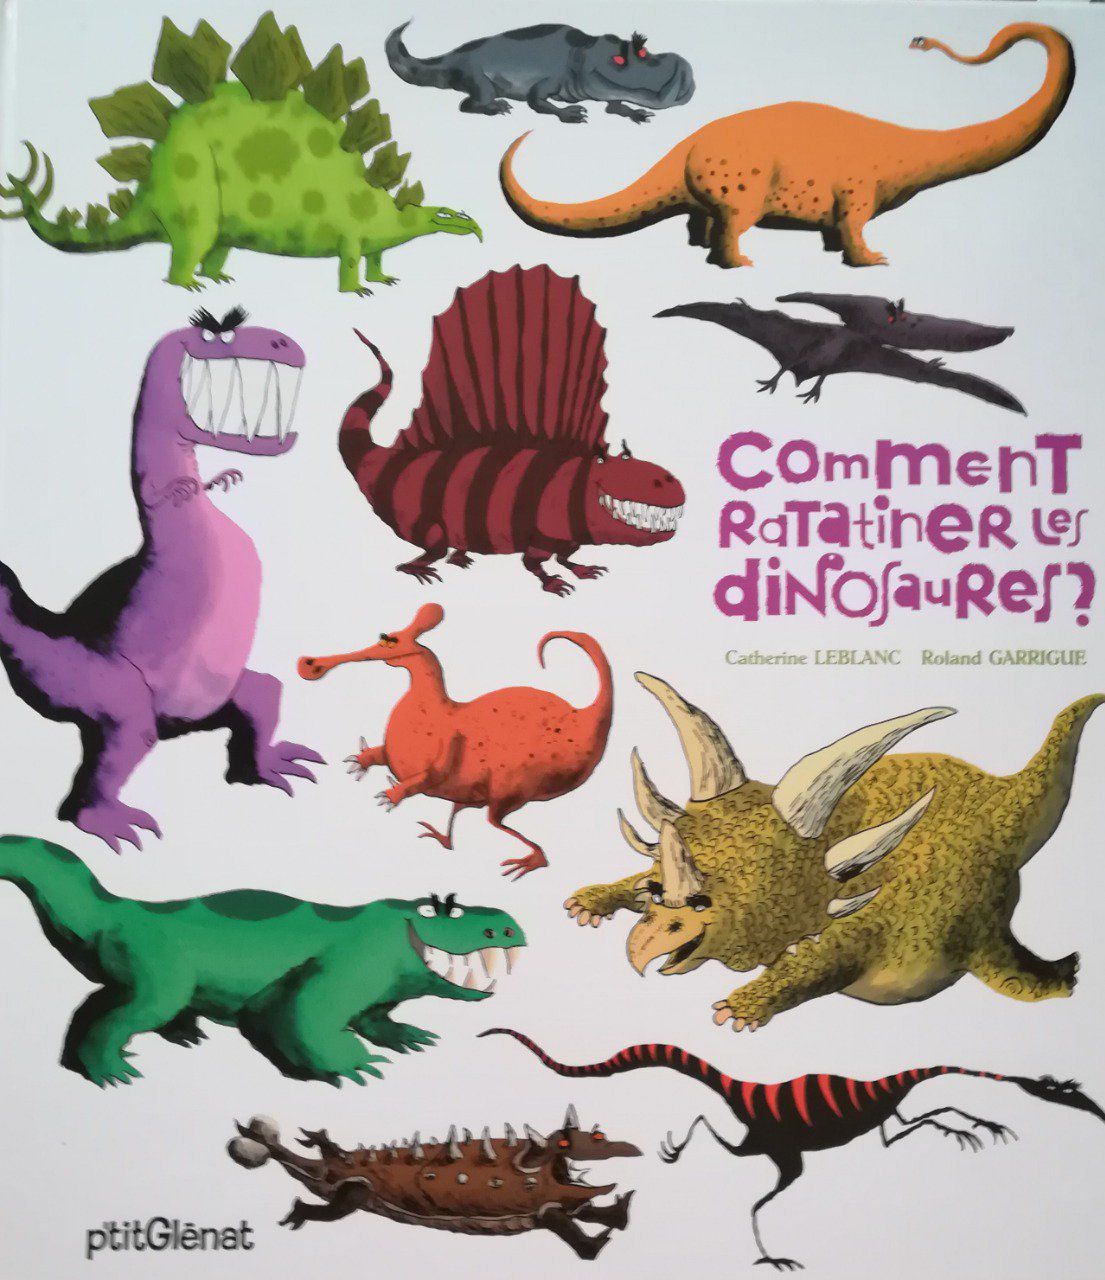 Comment ratatiner les dinosaures ?